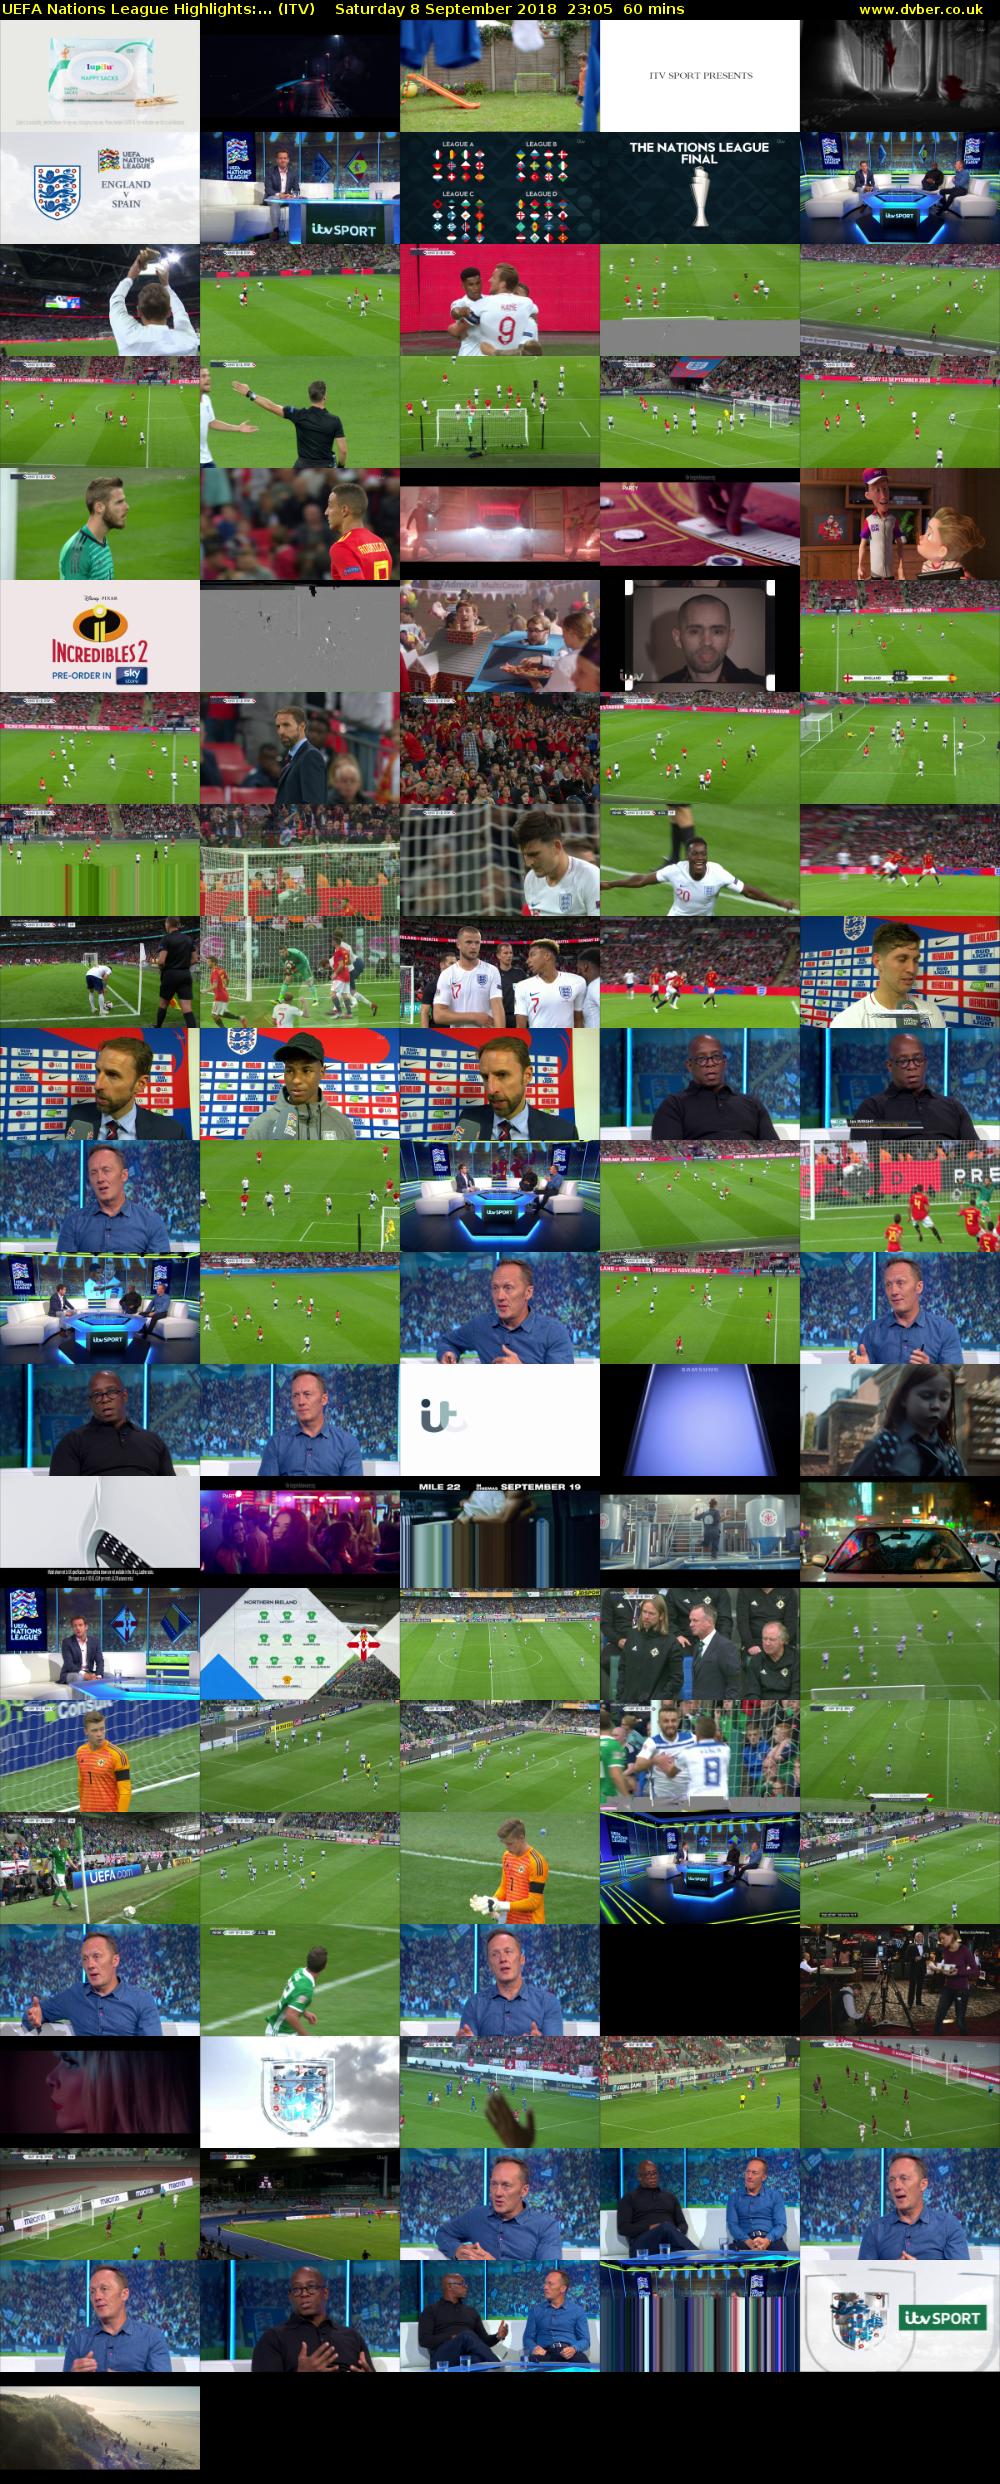 UEFA Nations League Highlights:... (ITV) Saturday 8 September 2018 23:05 - 00:05